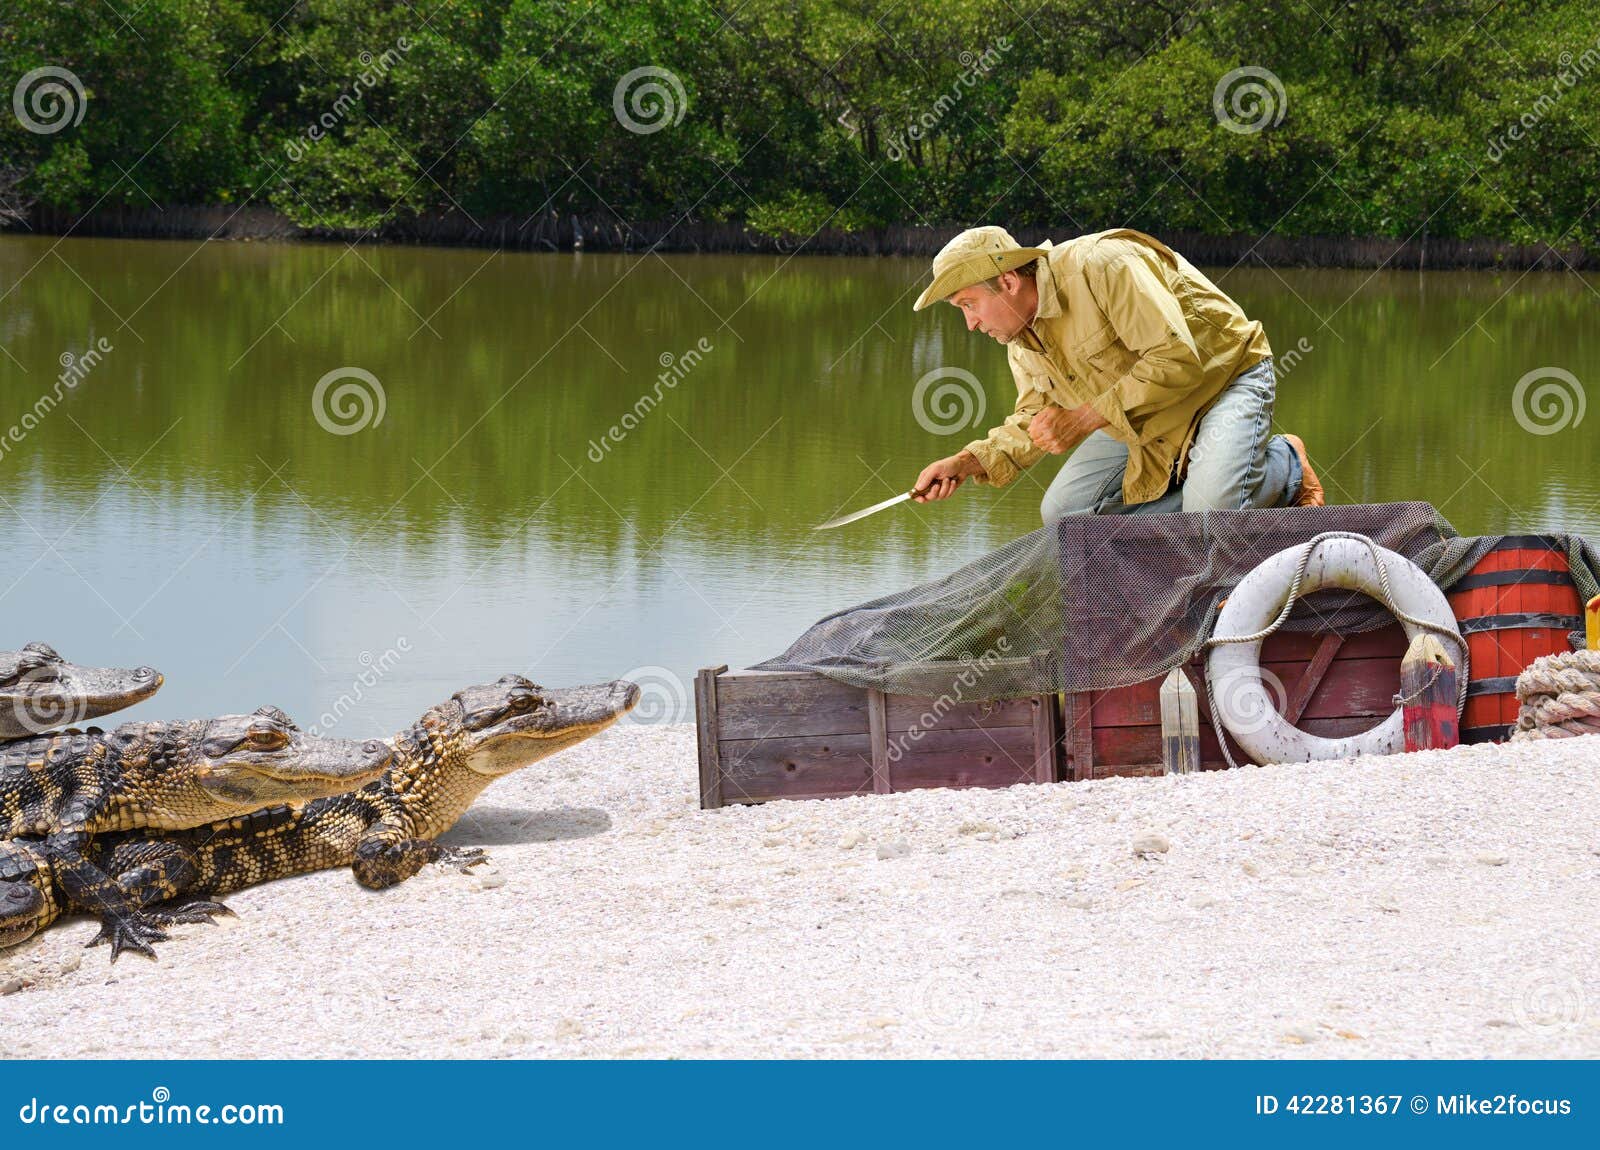 ship wrecked castaway swamp man alligator attack